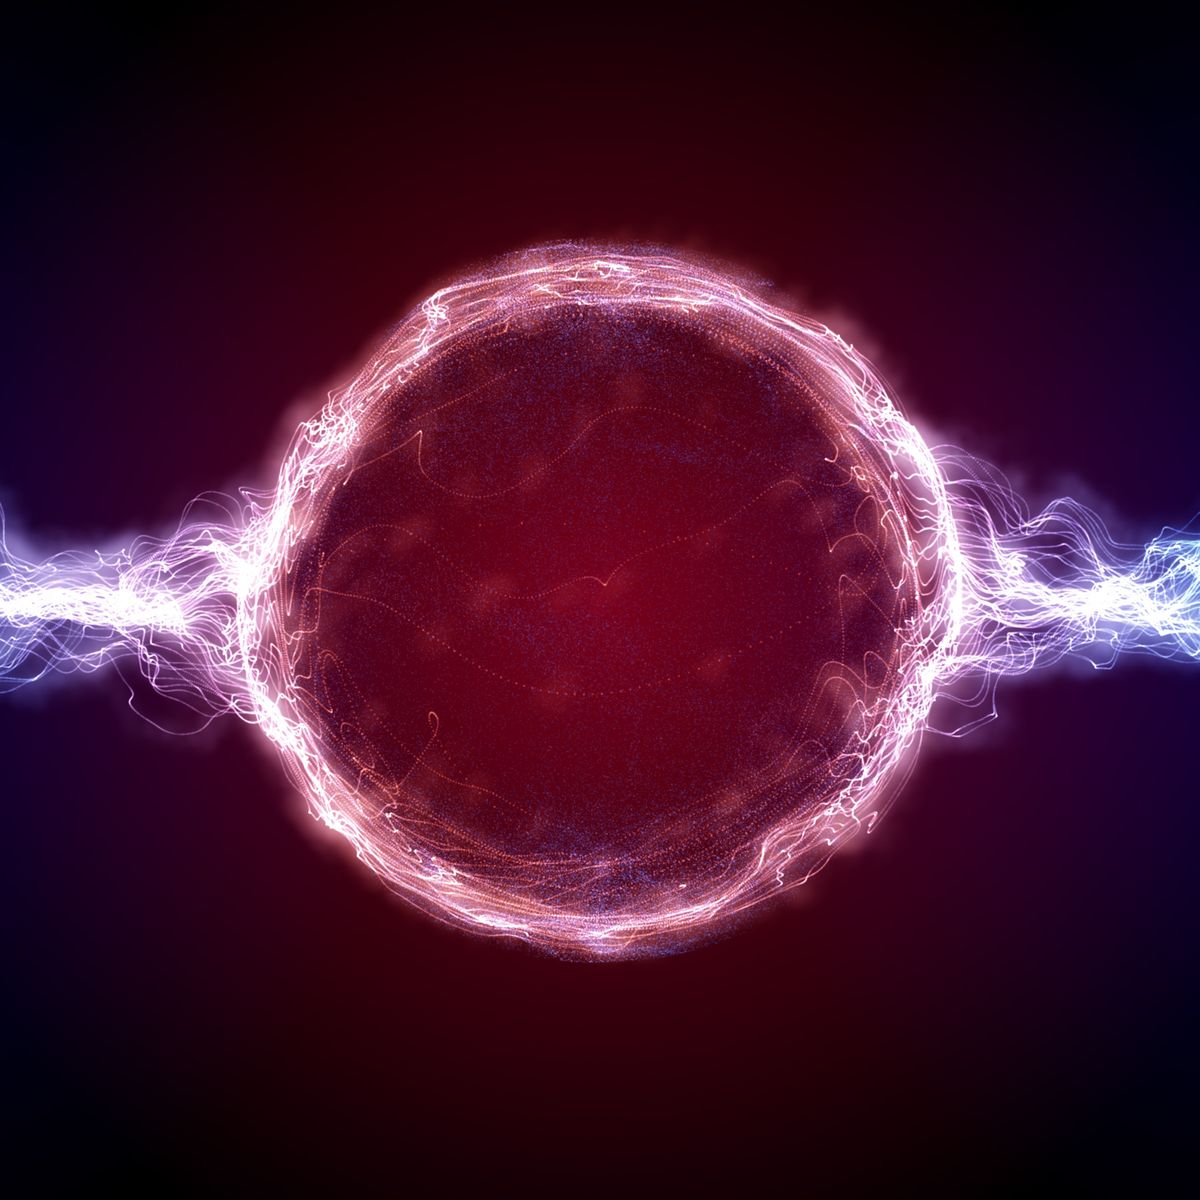 plasma flowing from ball, illustration